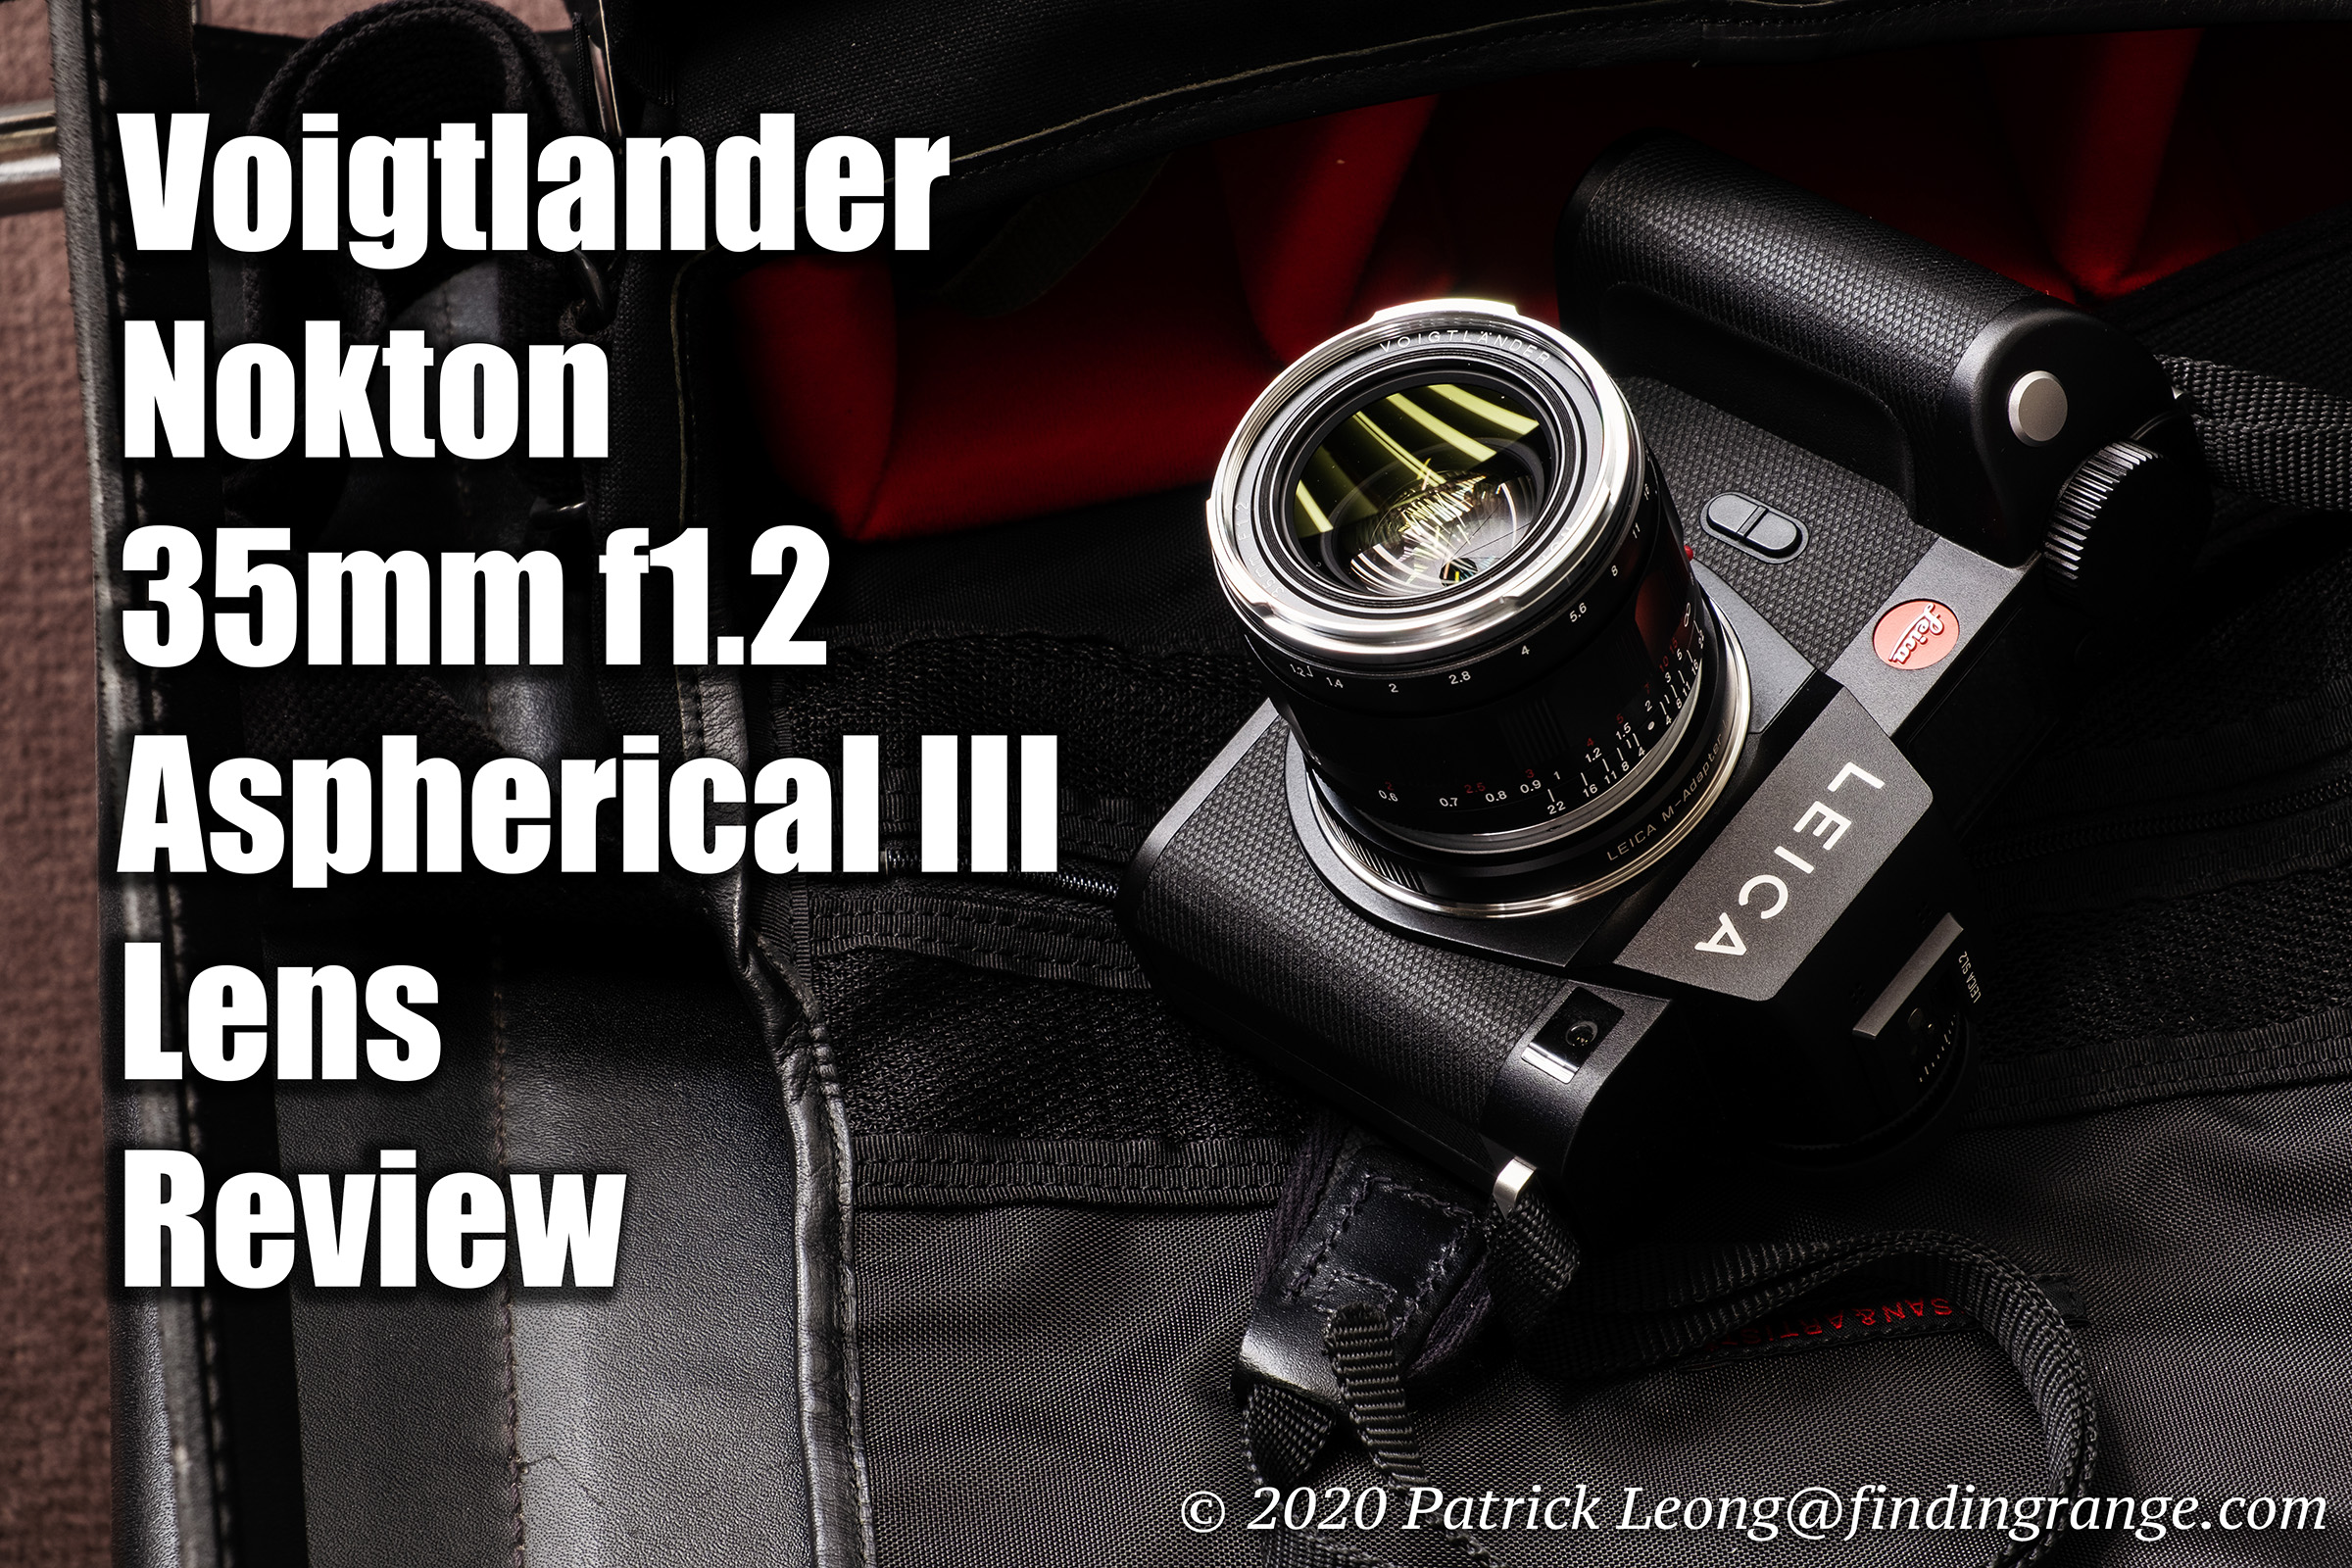 Voigtlander Nokton 35mm f1.2 Aspherical III Lens Review